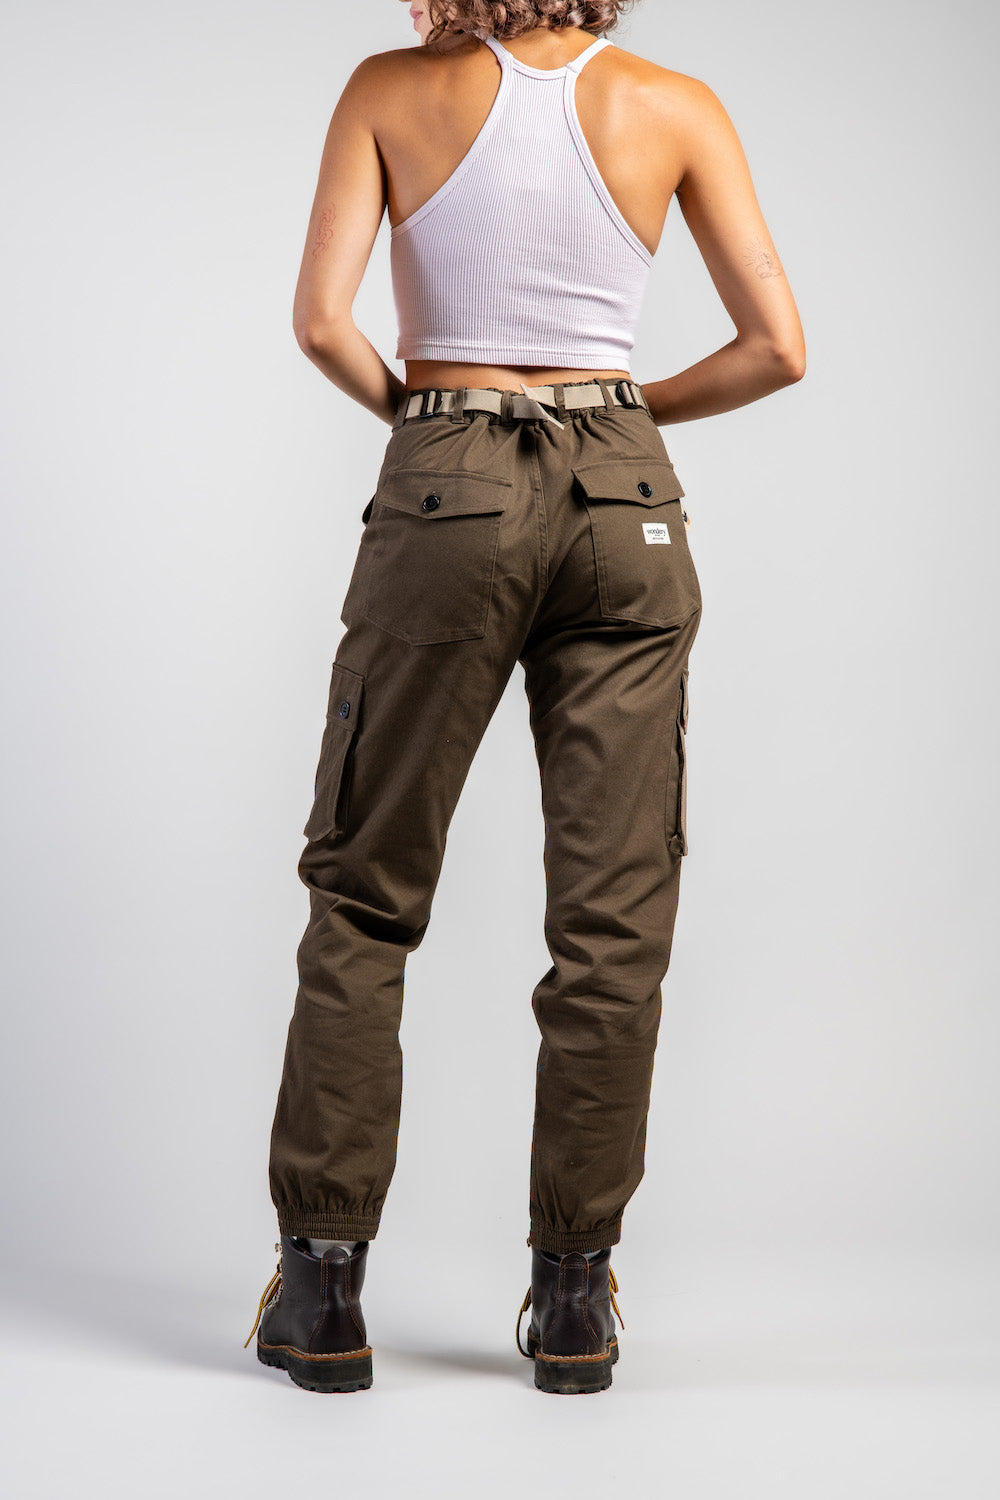 Women's High Waisted Pockets Adjustable Hem Hiking Cargo Pants